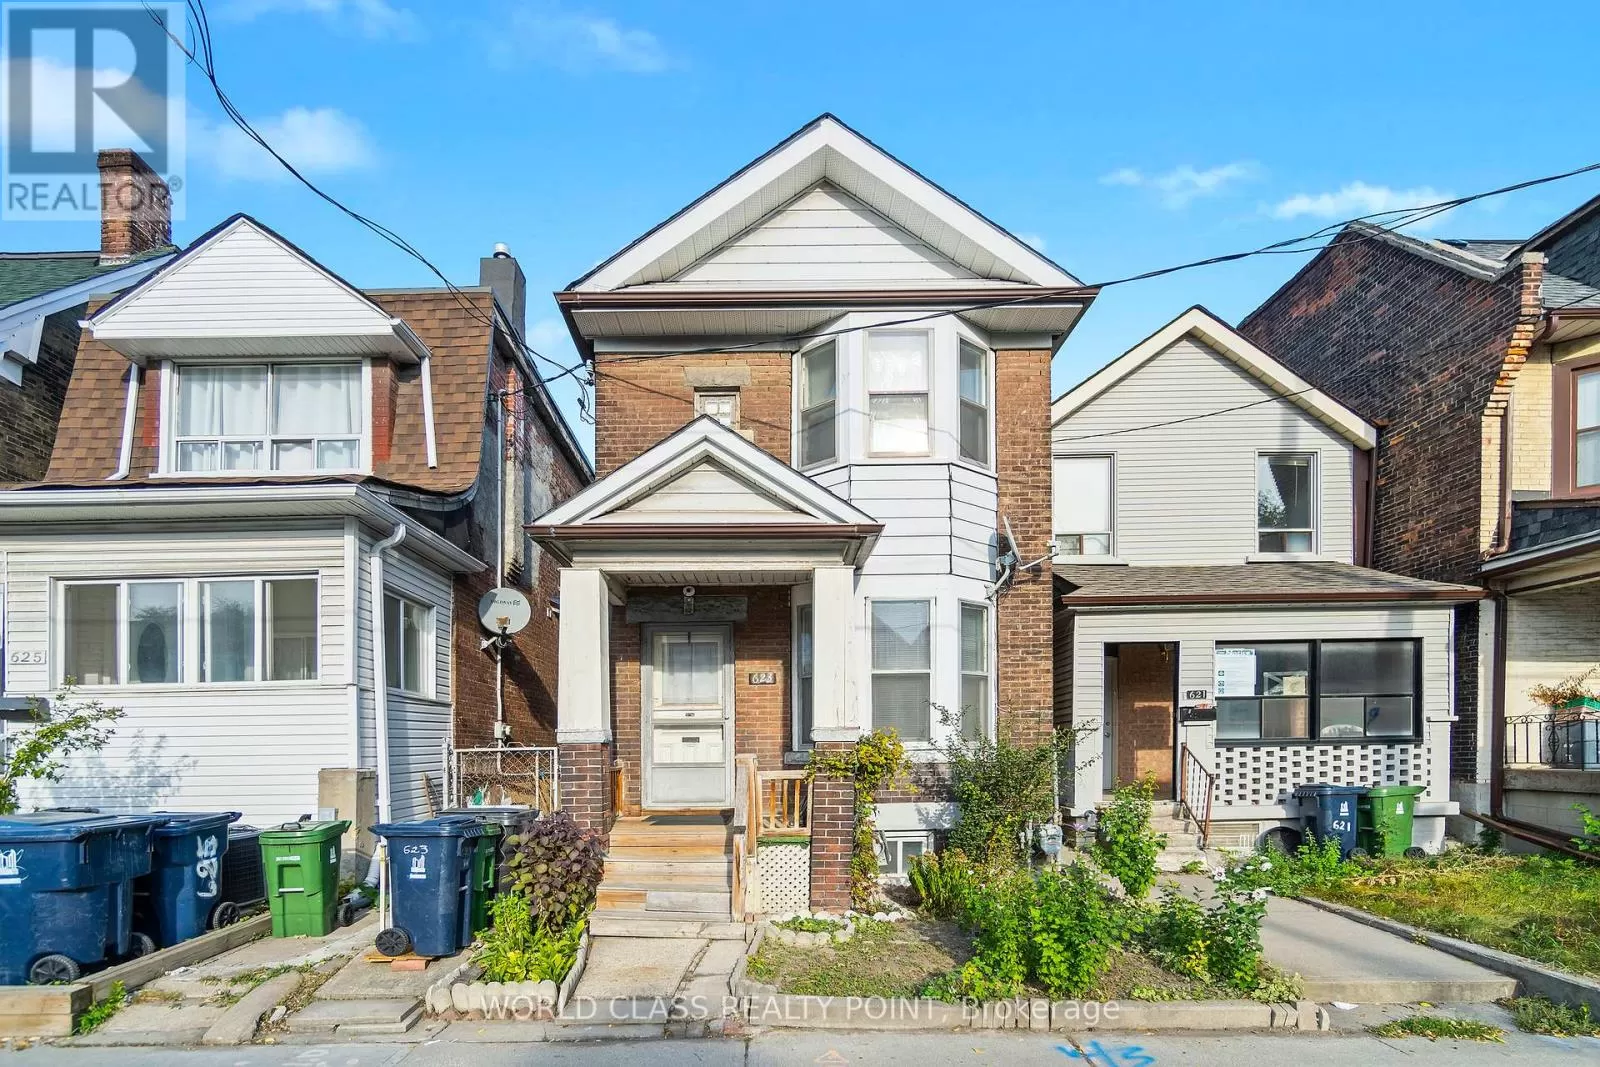 House for rent: 623 Ossington Avenue, Toronto, Ontario M6G 3T6